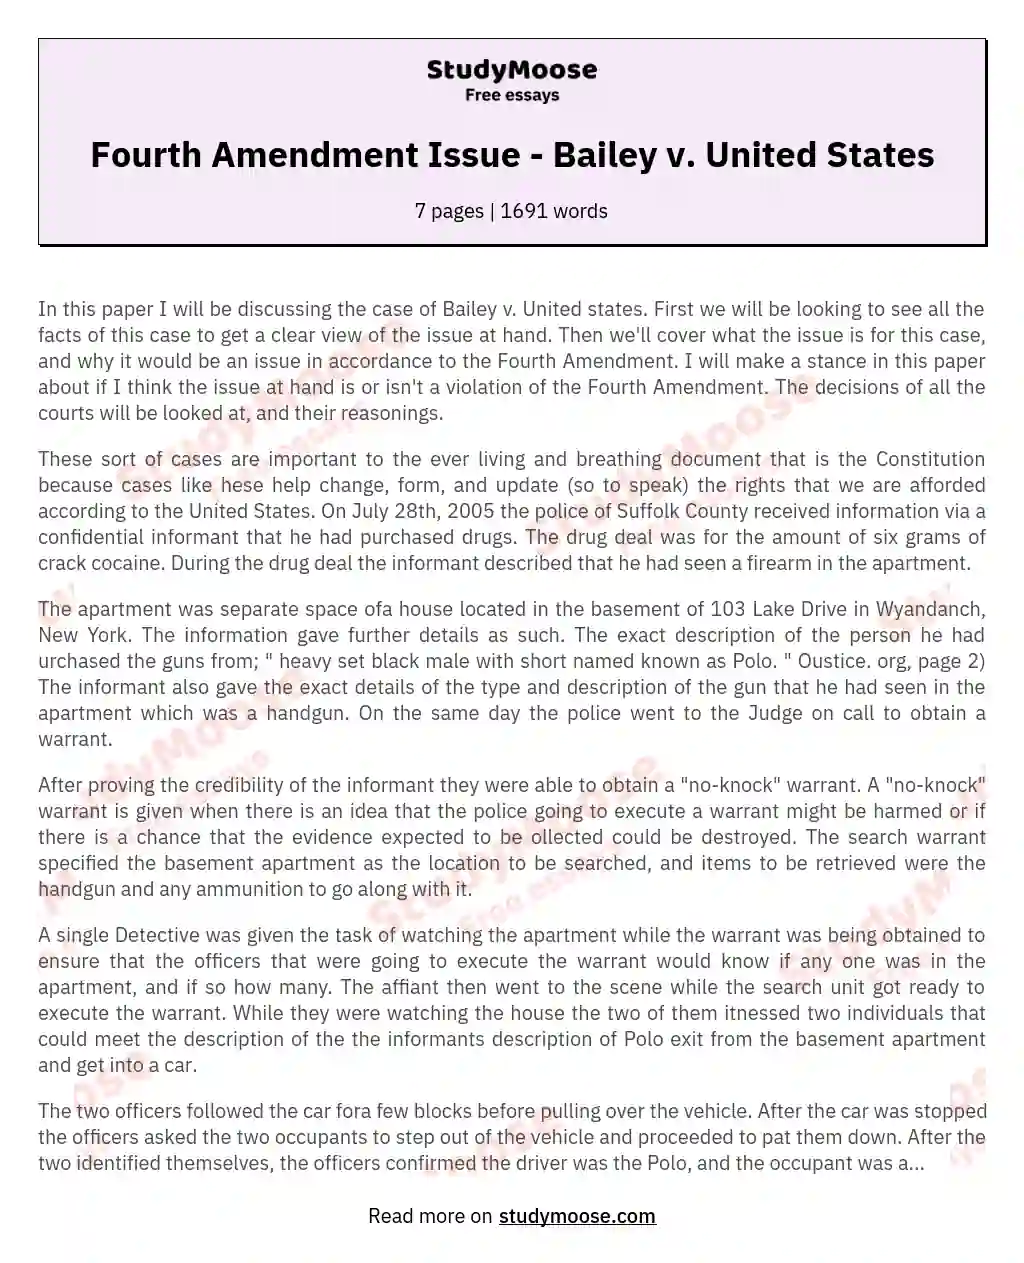 Fourth Amendment Issue - Bailey v. United States